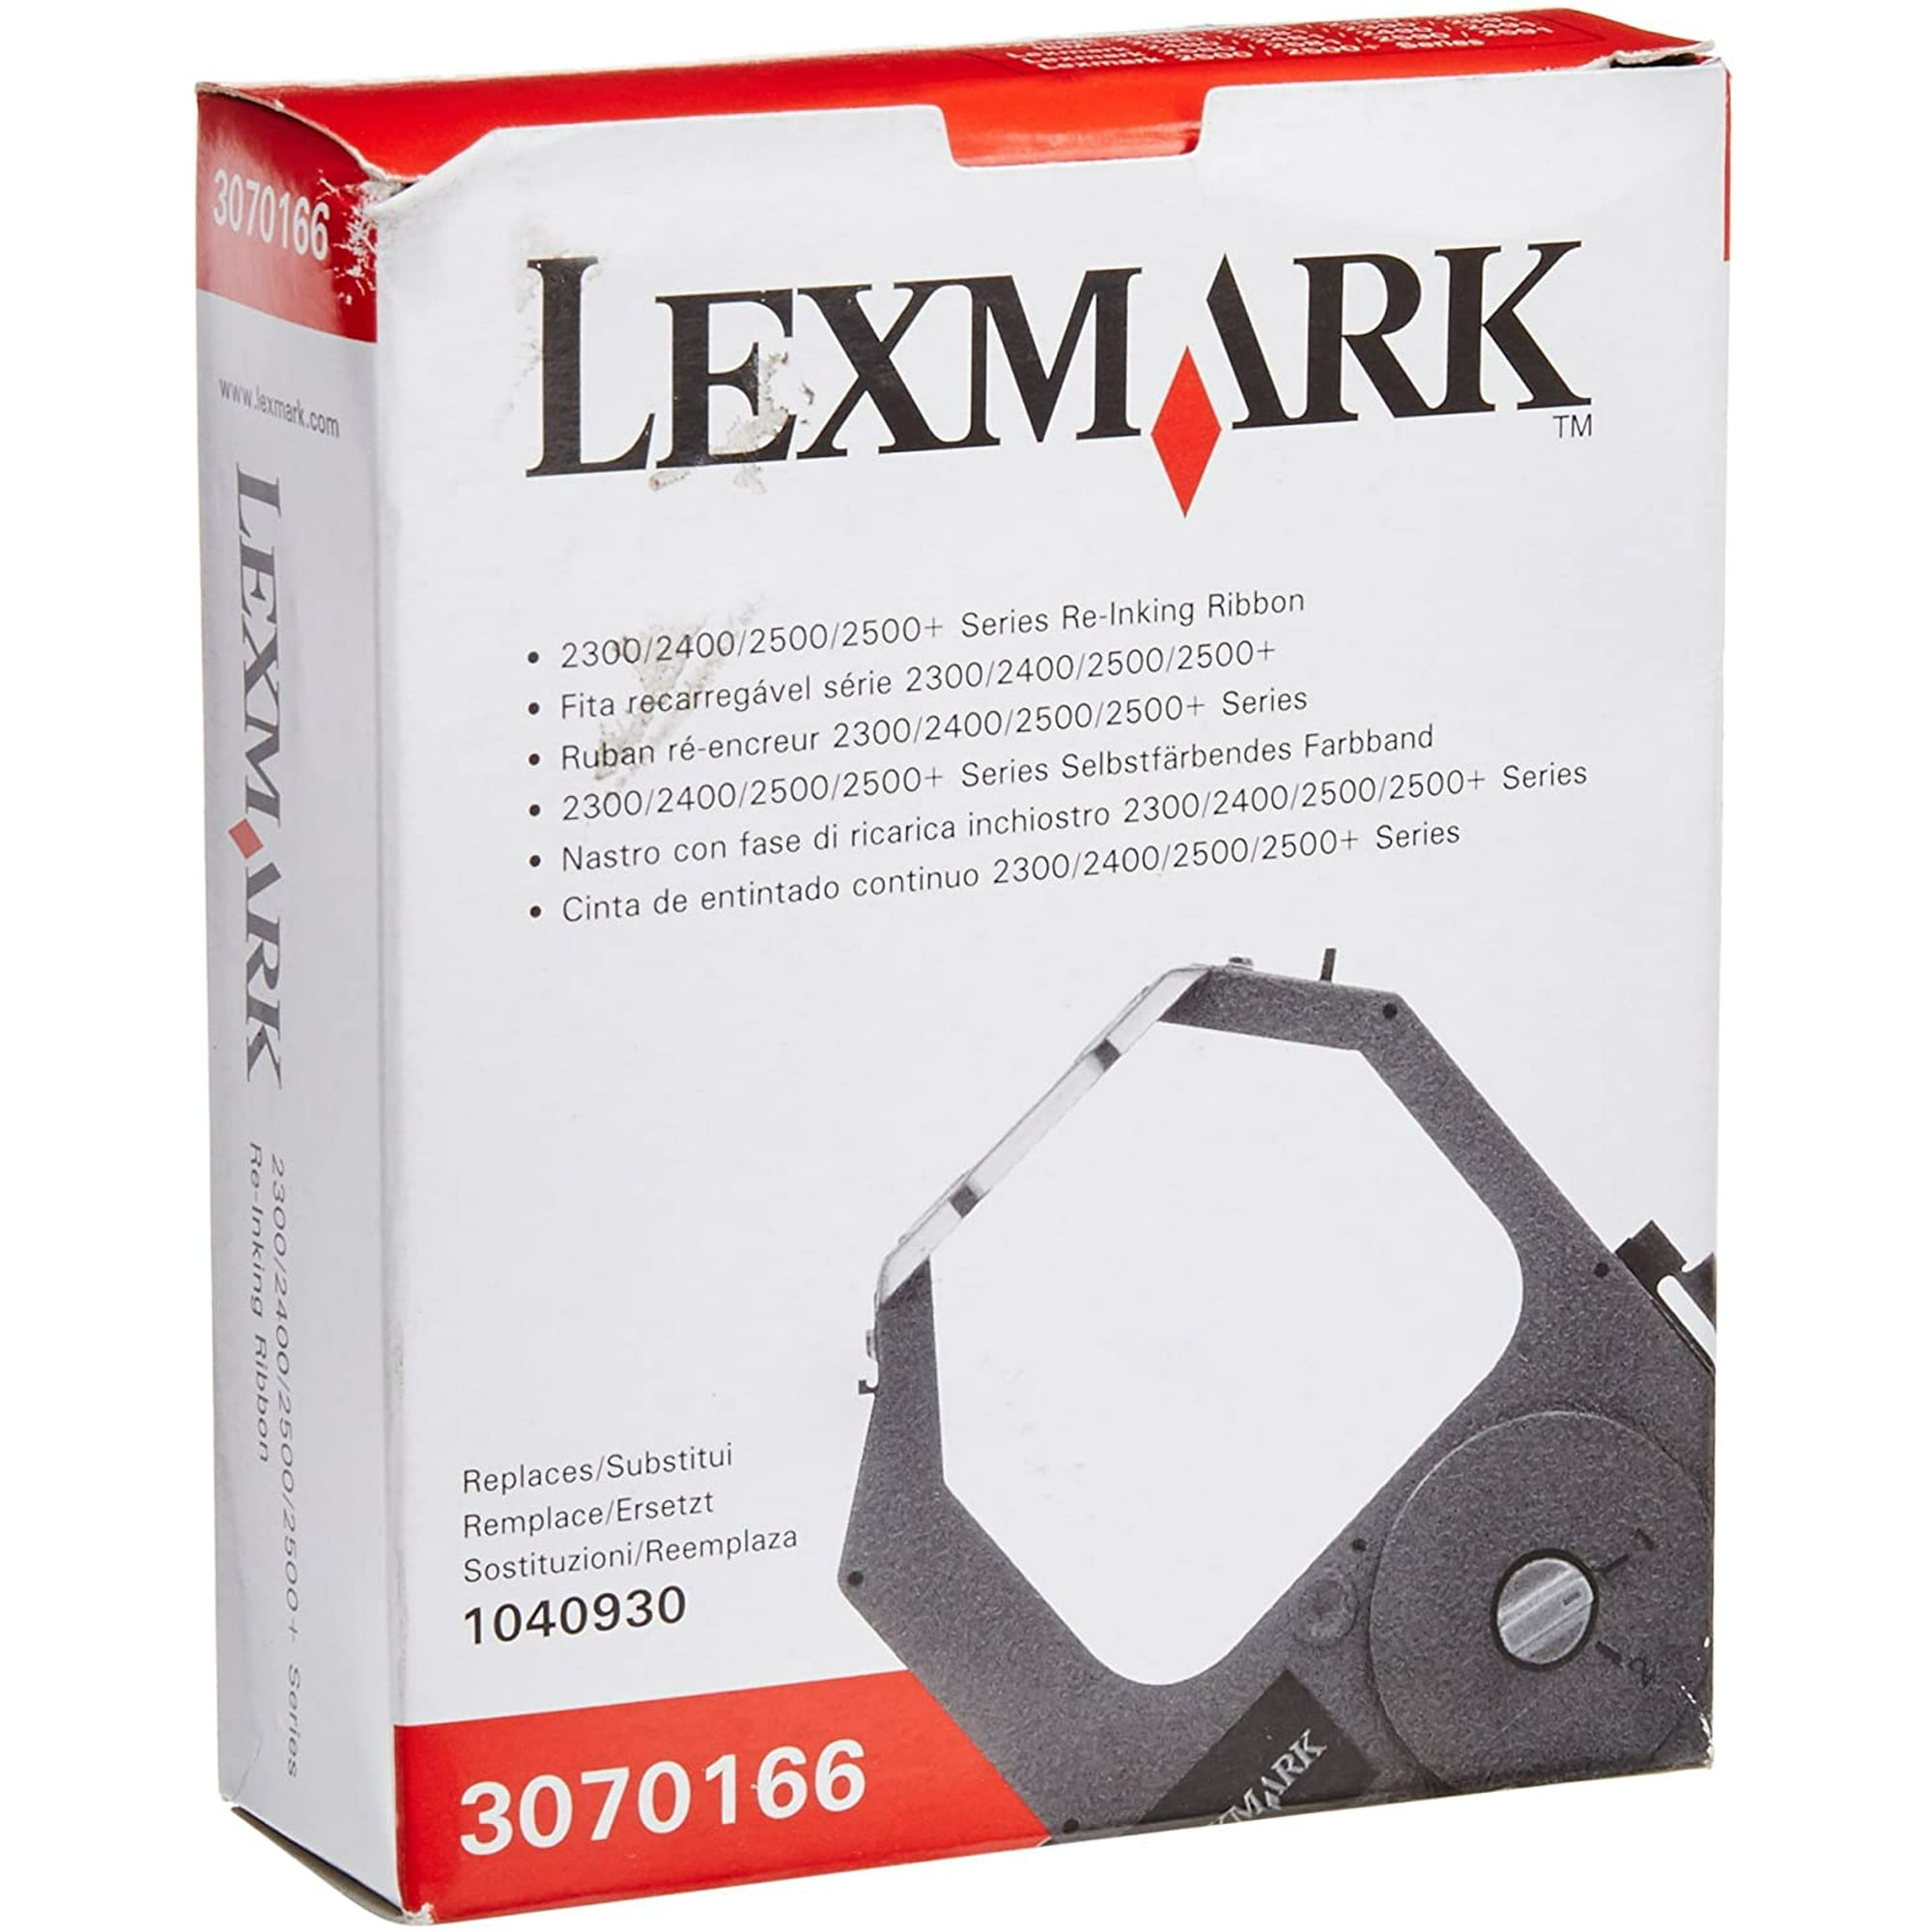 Lexmark 3070166 Re-Inking Printer Ribbon for Lexmark 2300, 2400, 2500 | Walmart Canada